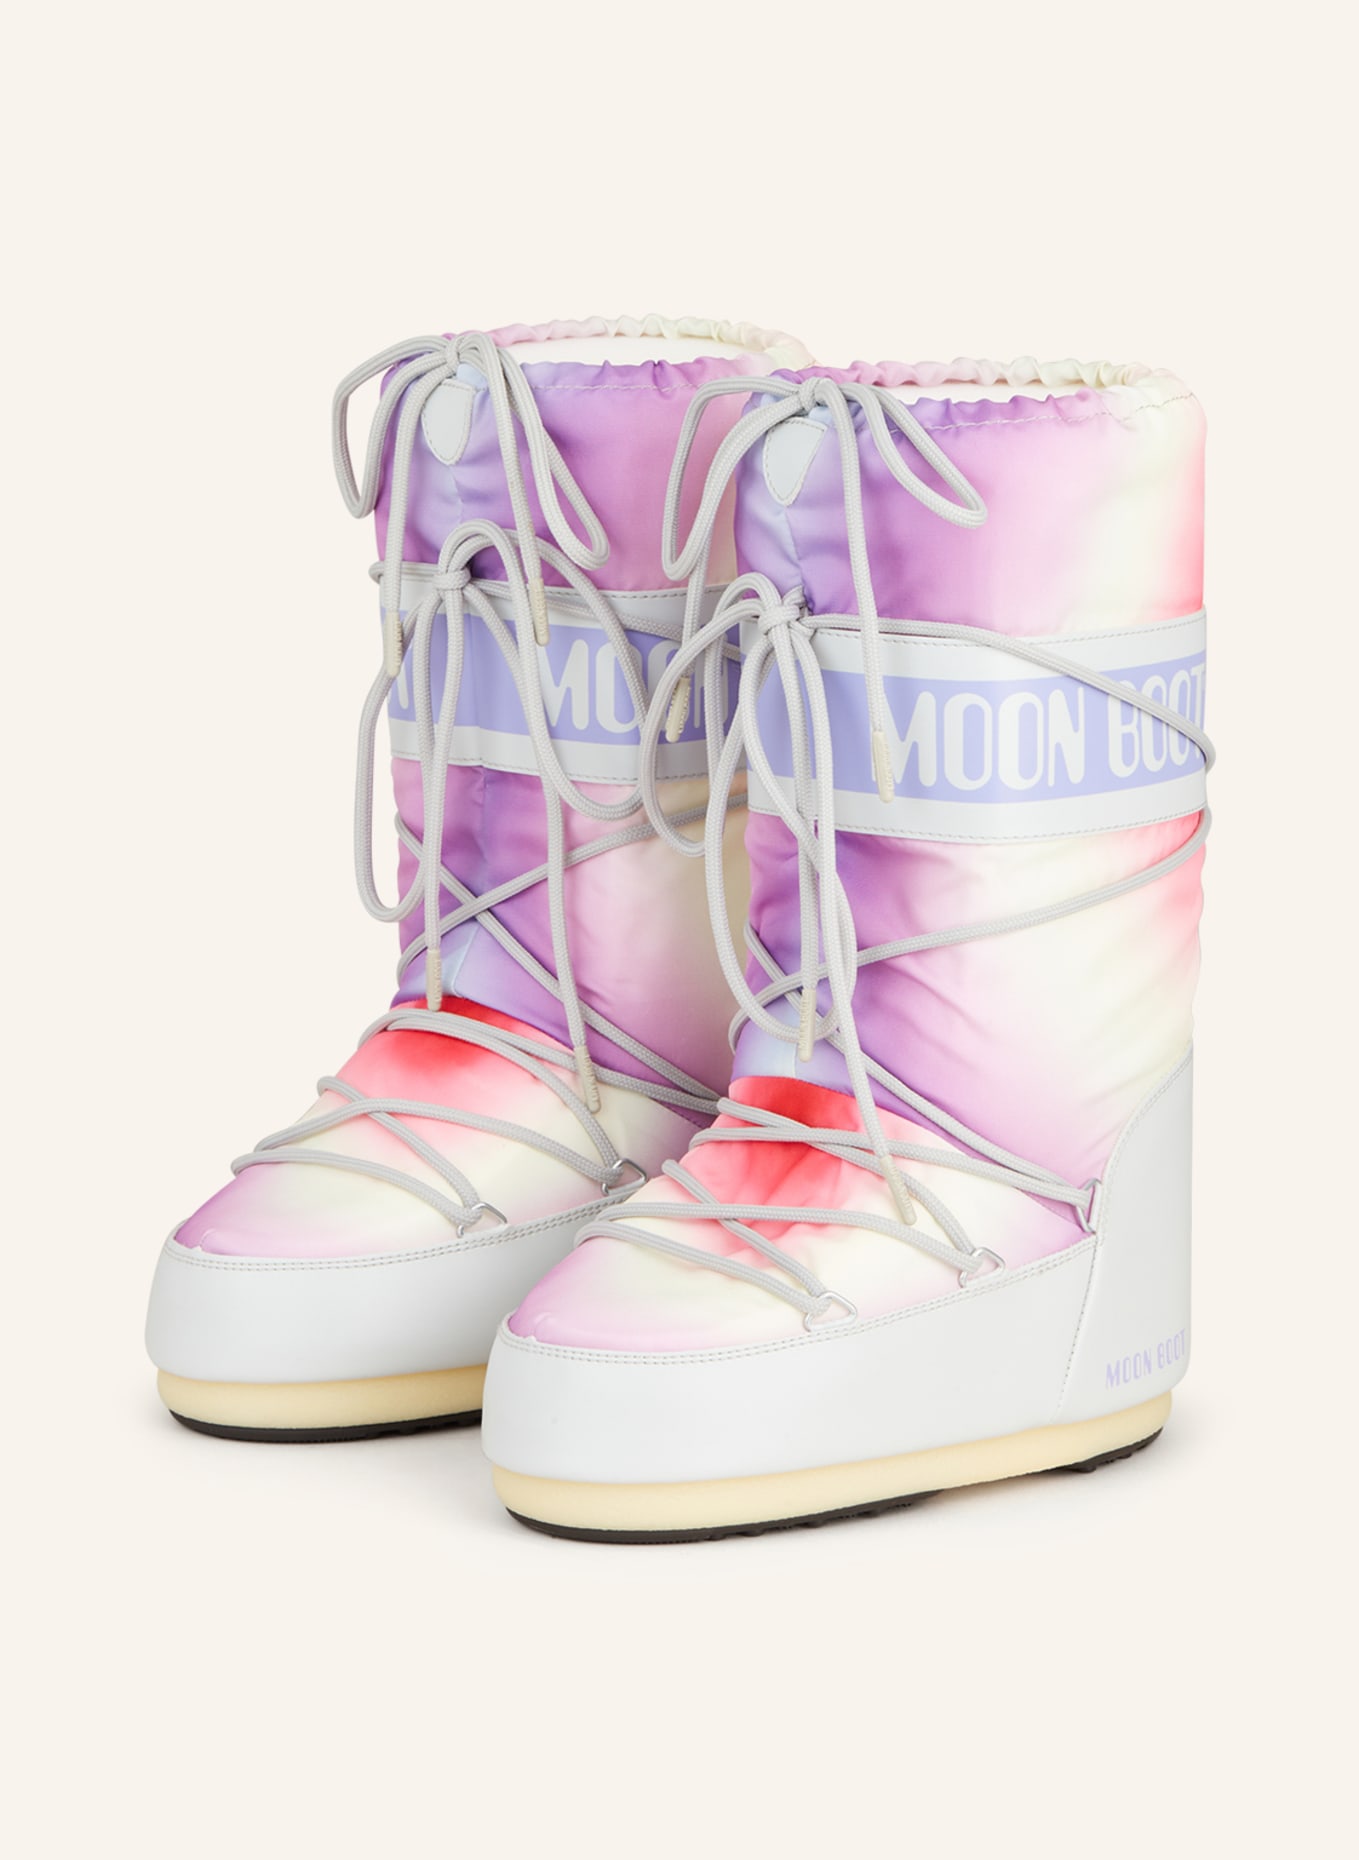 MOON BOOT Moon Boots ICON TIE DYE, Farbe: LILA/ PINK (Bild 1)